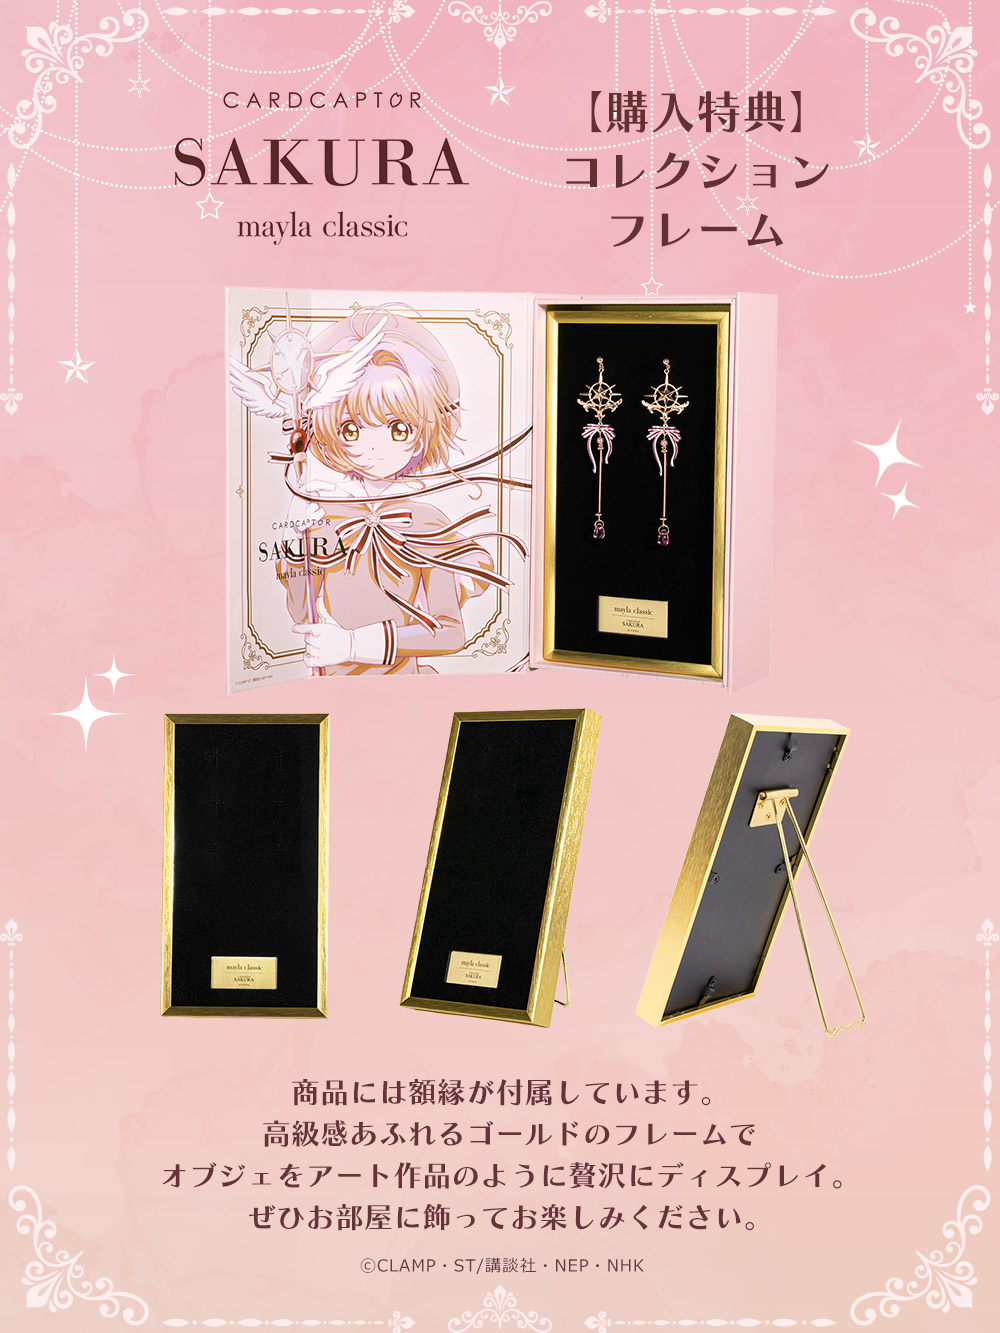 Second collaboration Cardcaptor Sakura x Mayla Classic, Purchase benefits